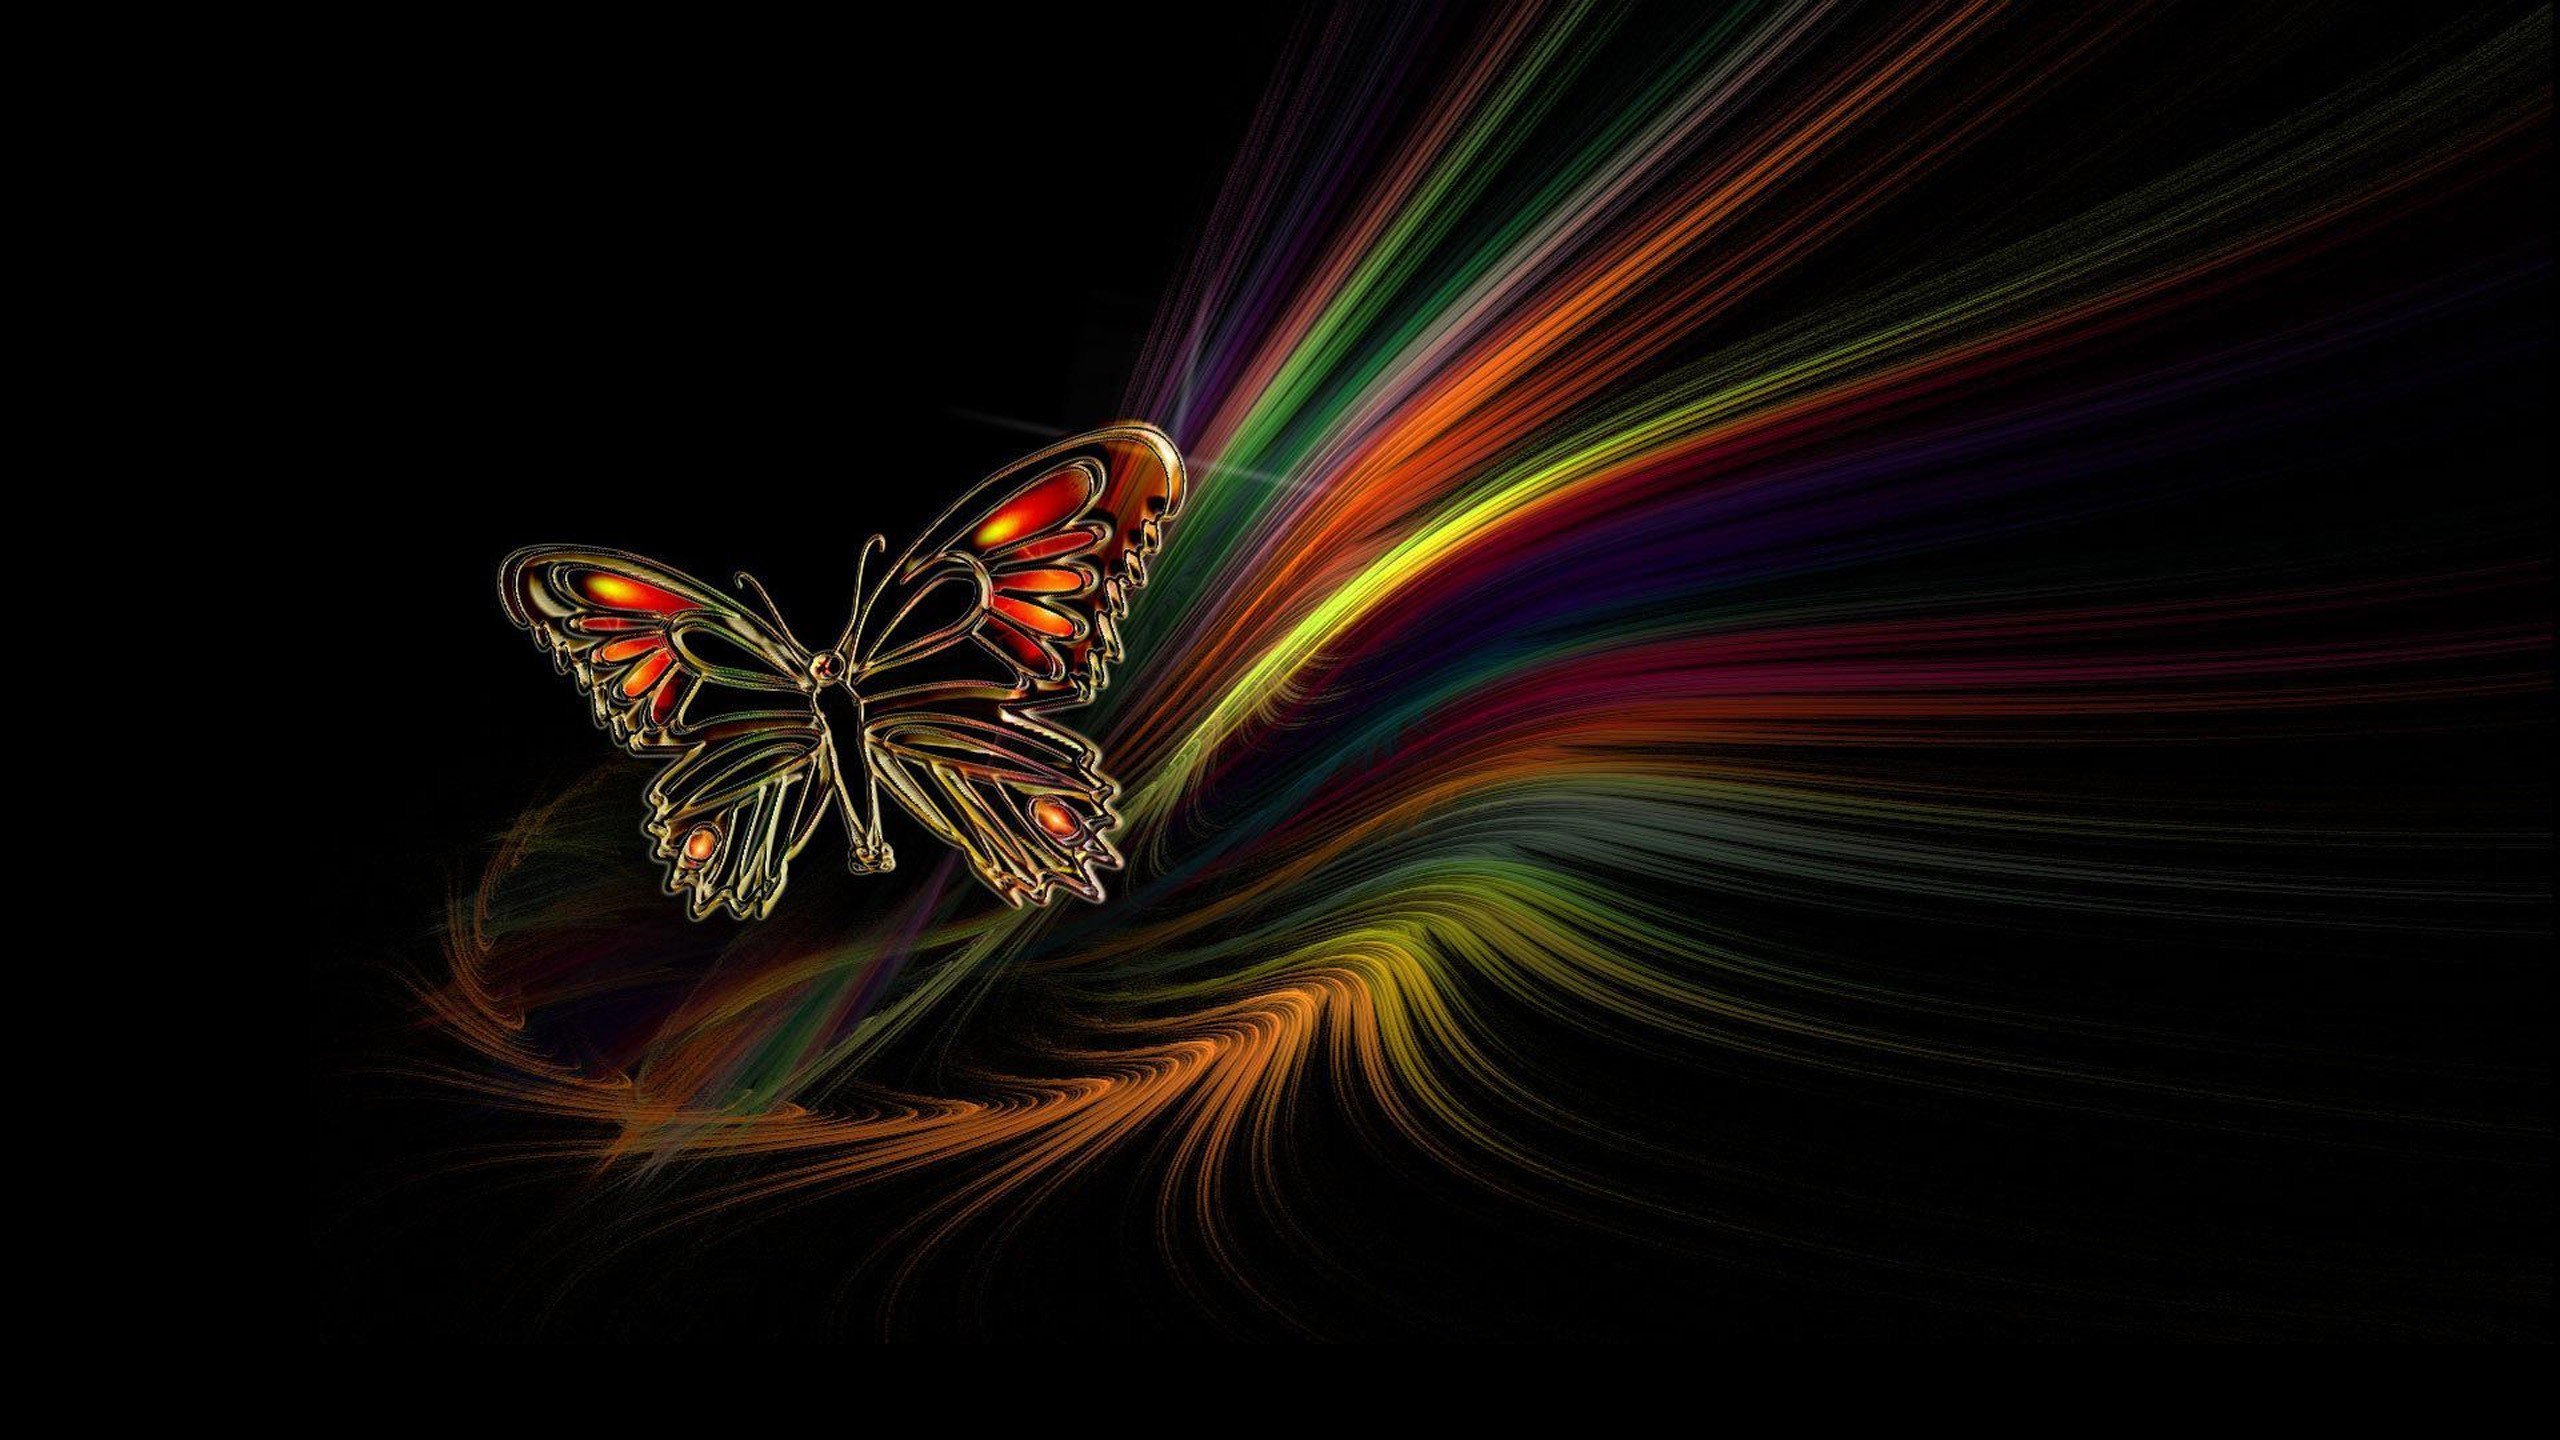 Картинки на сотку. Бабочка на темном фоне. Бабочка яркая на черном фоне. Яркие бабочки. Радужная бабочка.